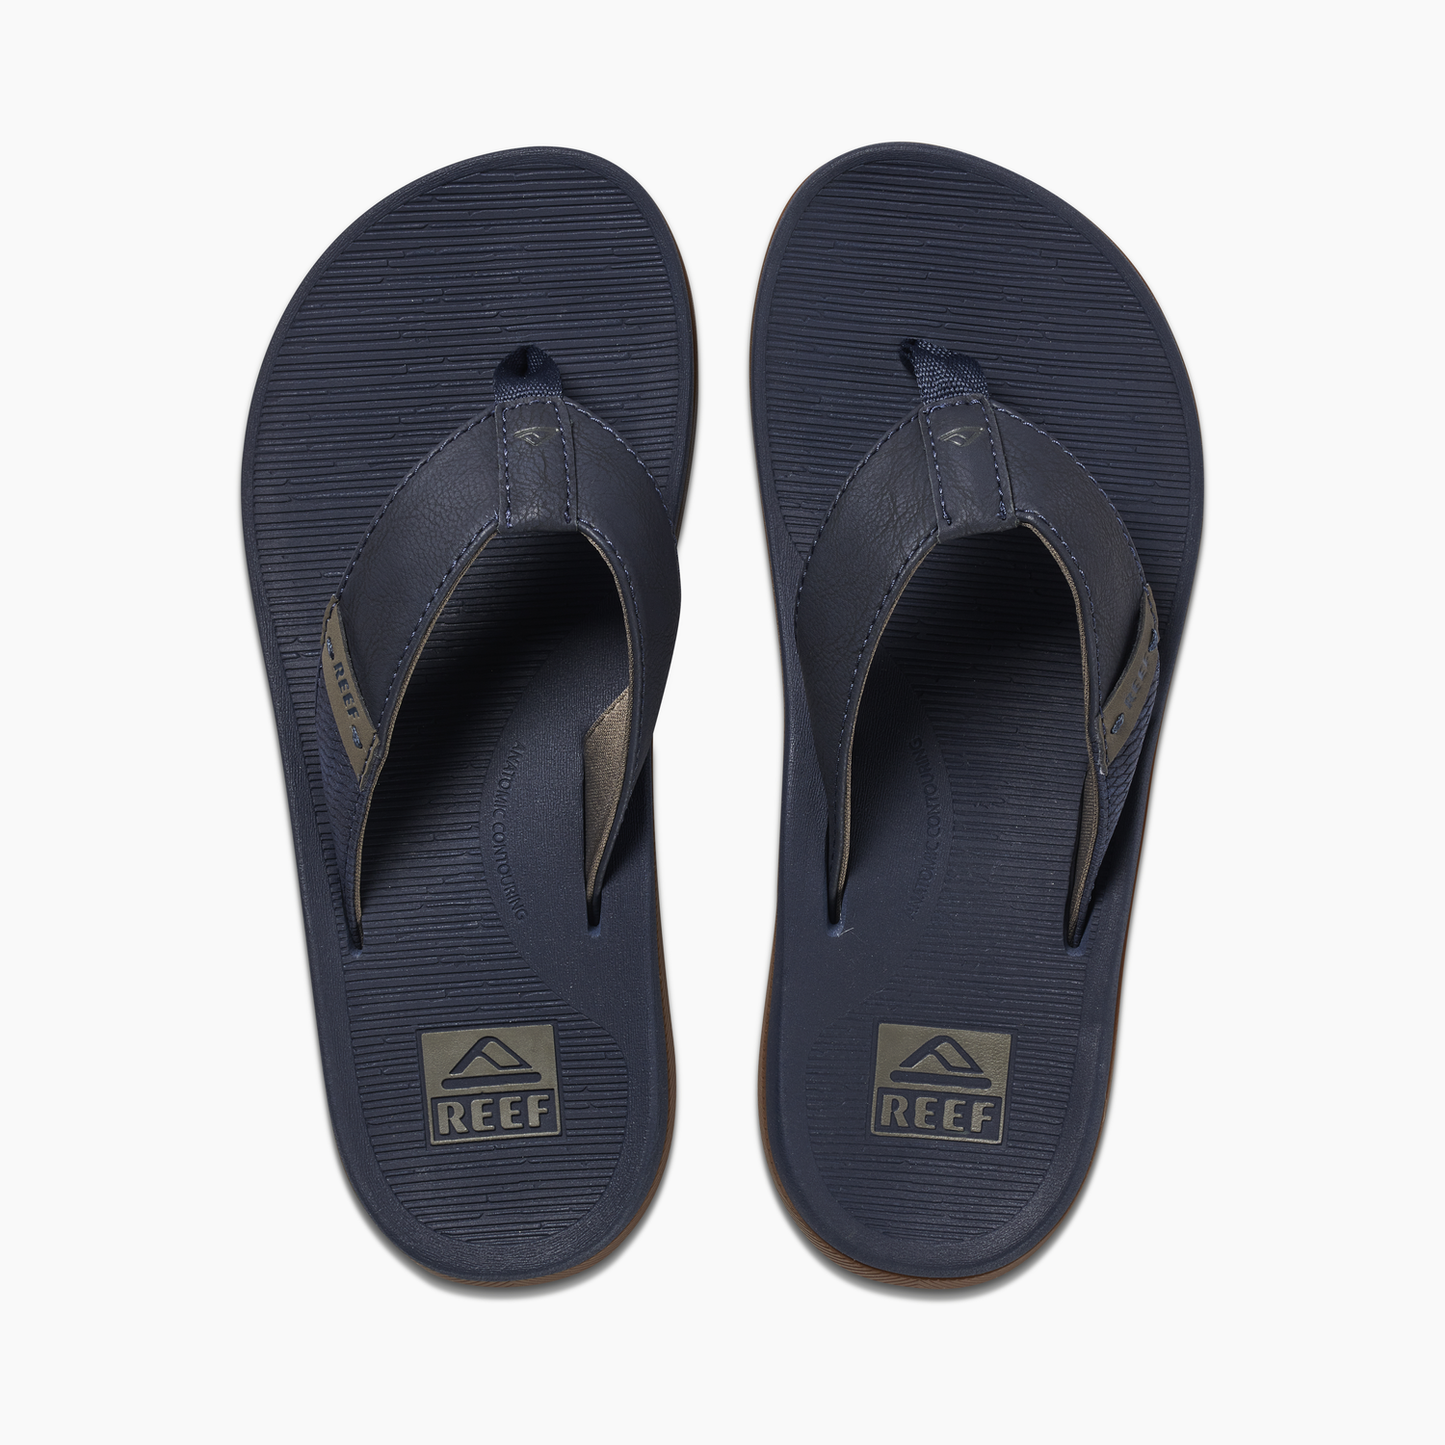 Reef Santa Ana Men's Sandals - Super Soft - Navy Mens Footwear